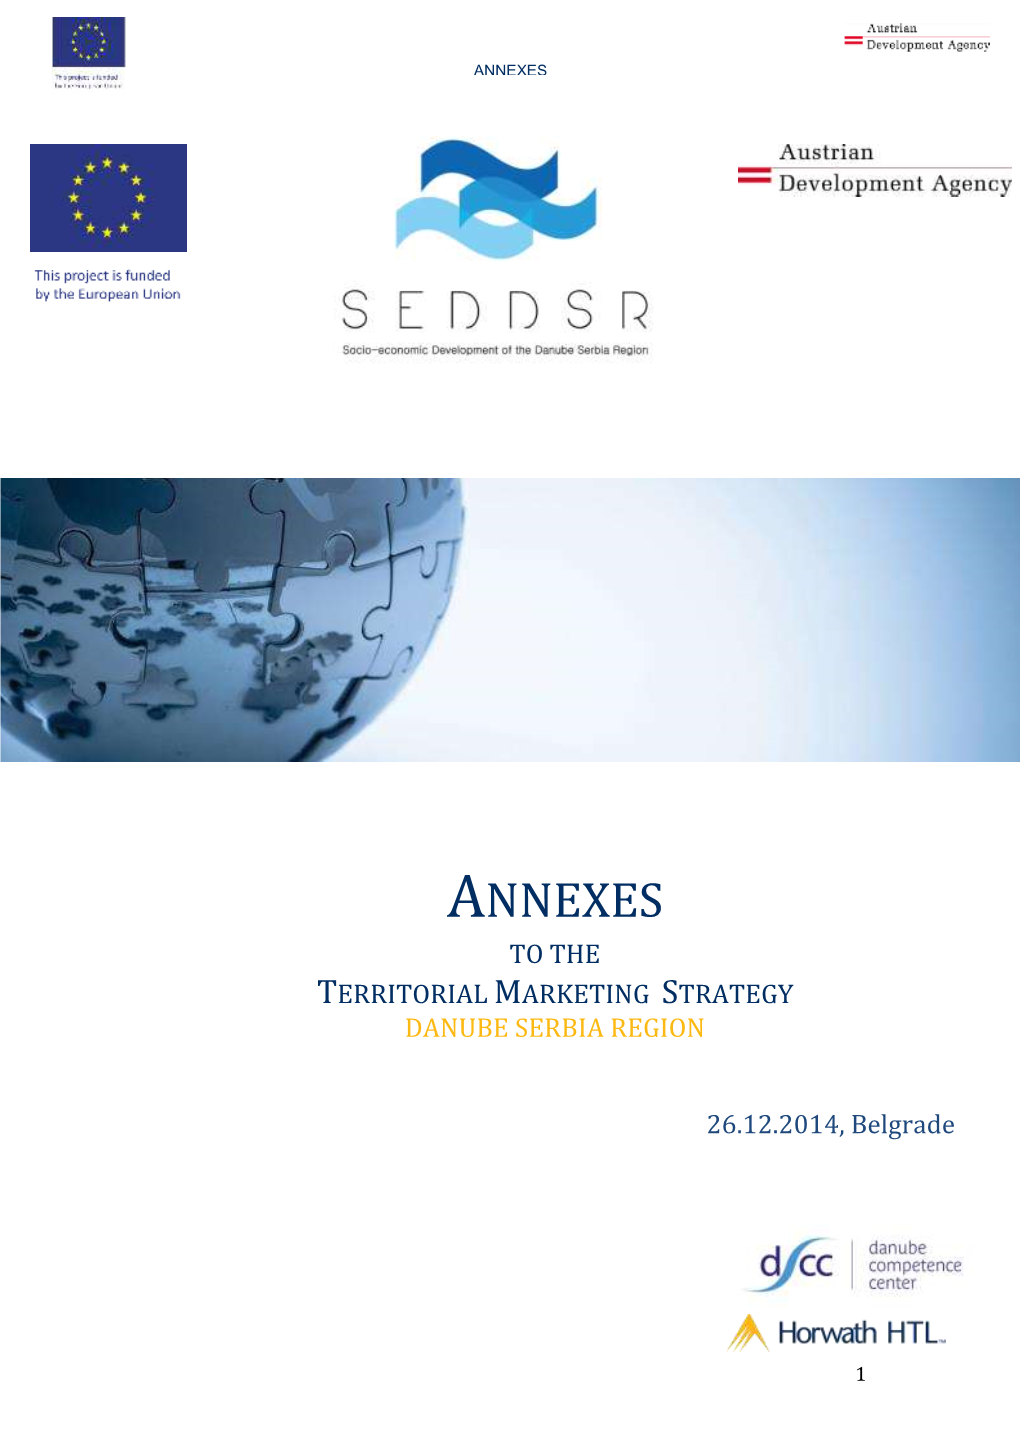 Annexes to the Territorial Marketing Strategy / Danube Serbia Region